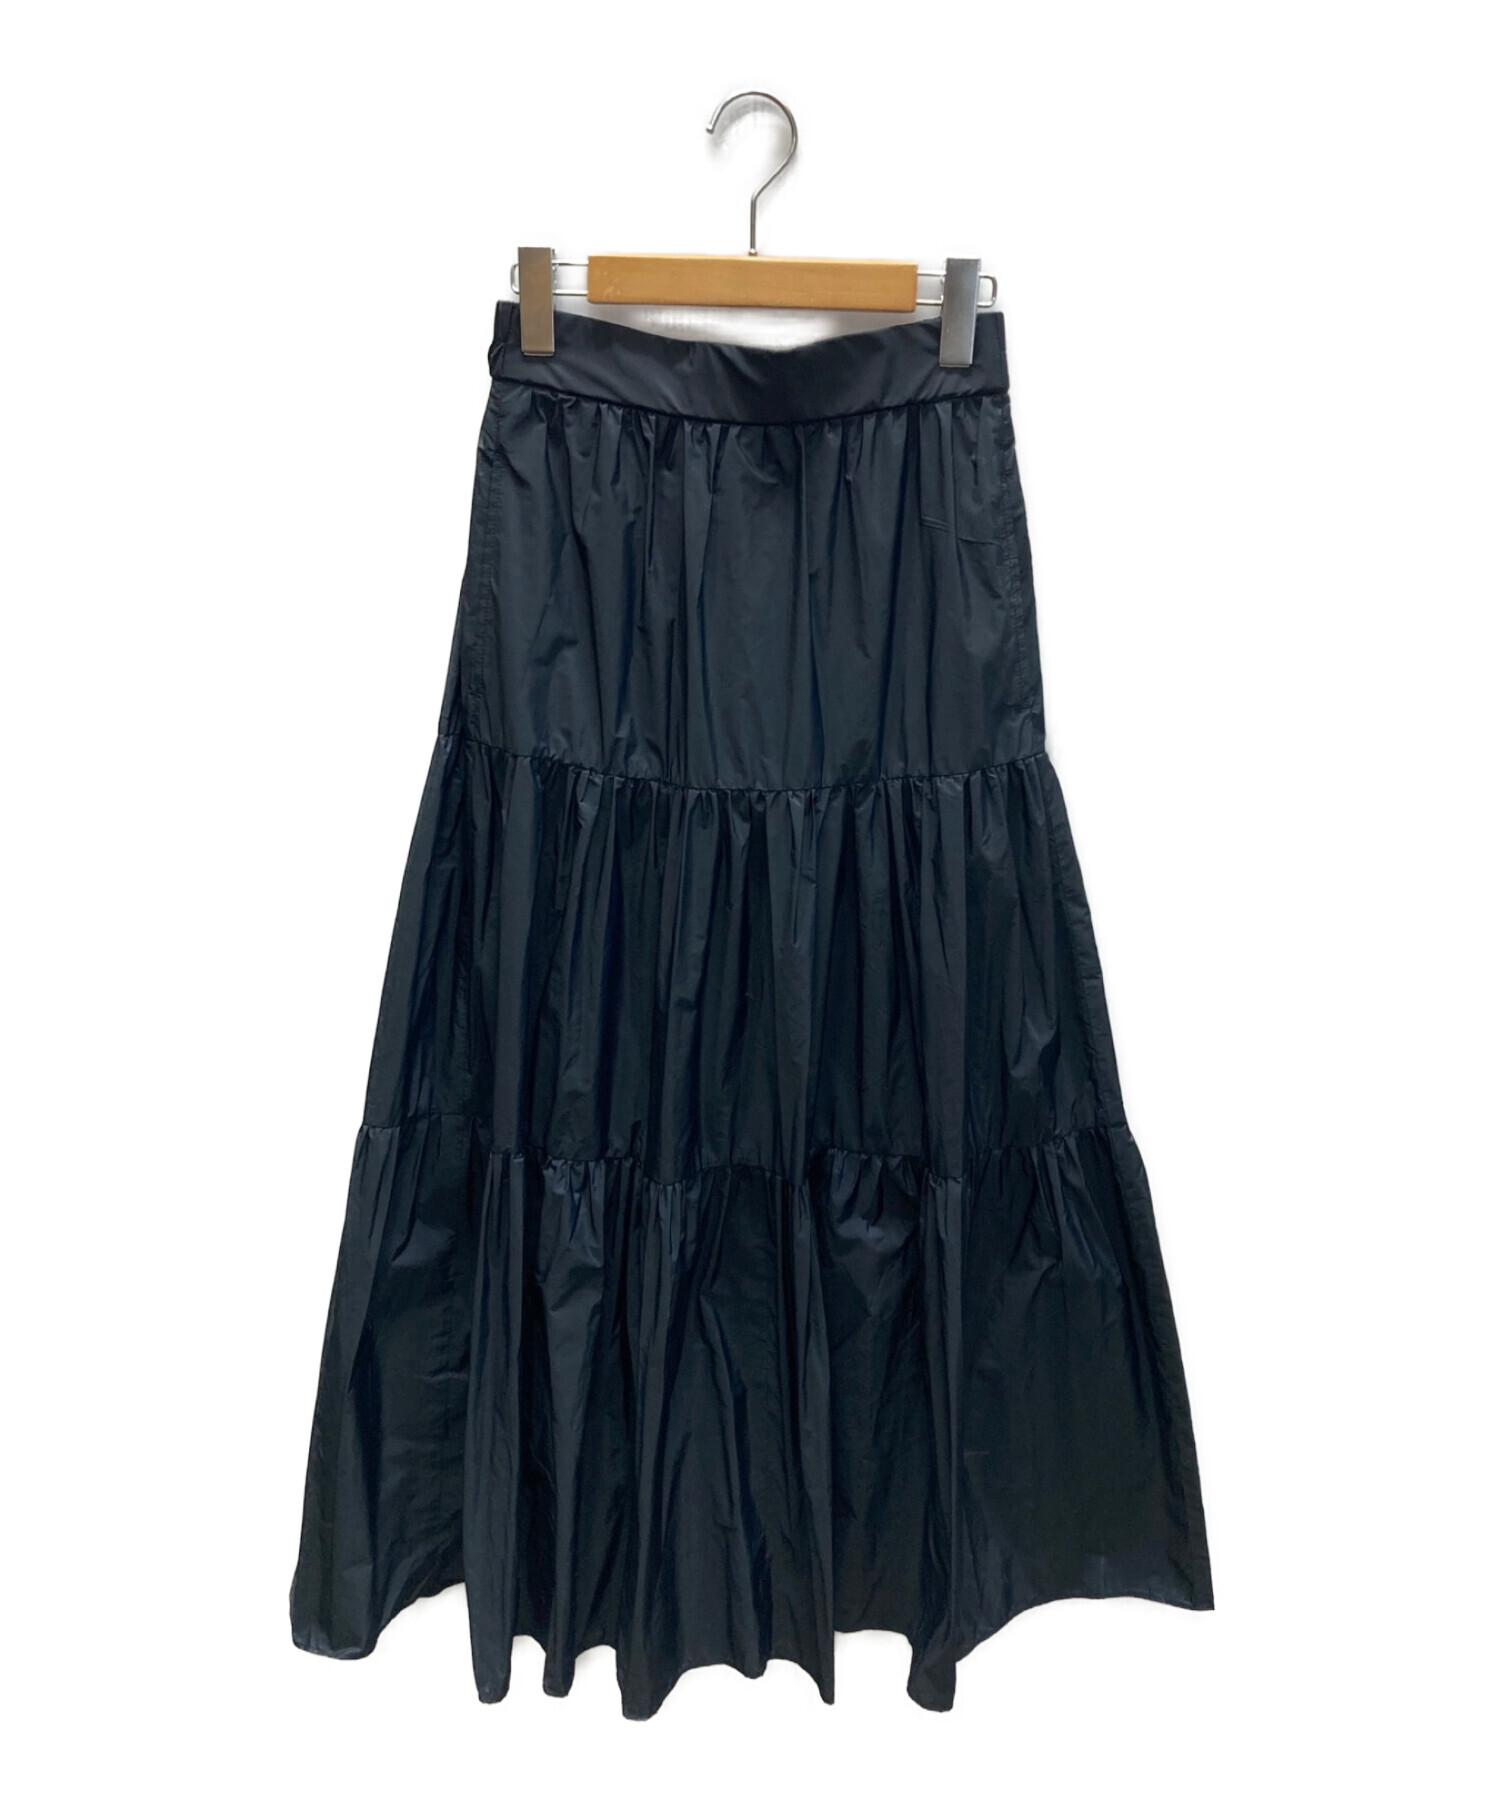 【Rene】新品未使用・黒・ティアードスカート・36サイズ